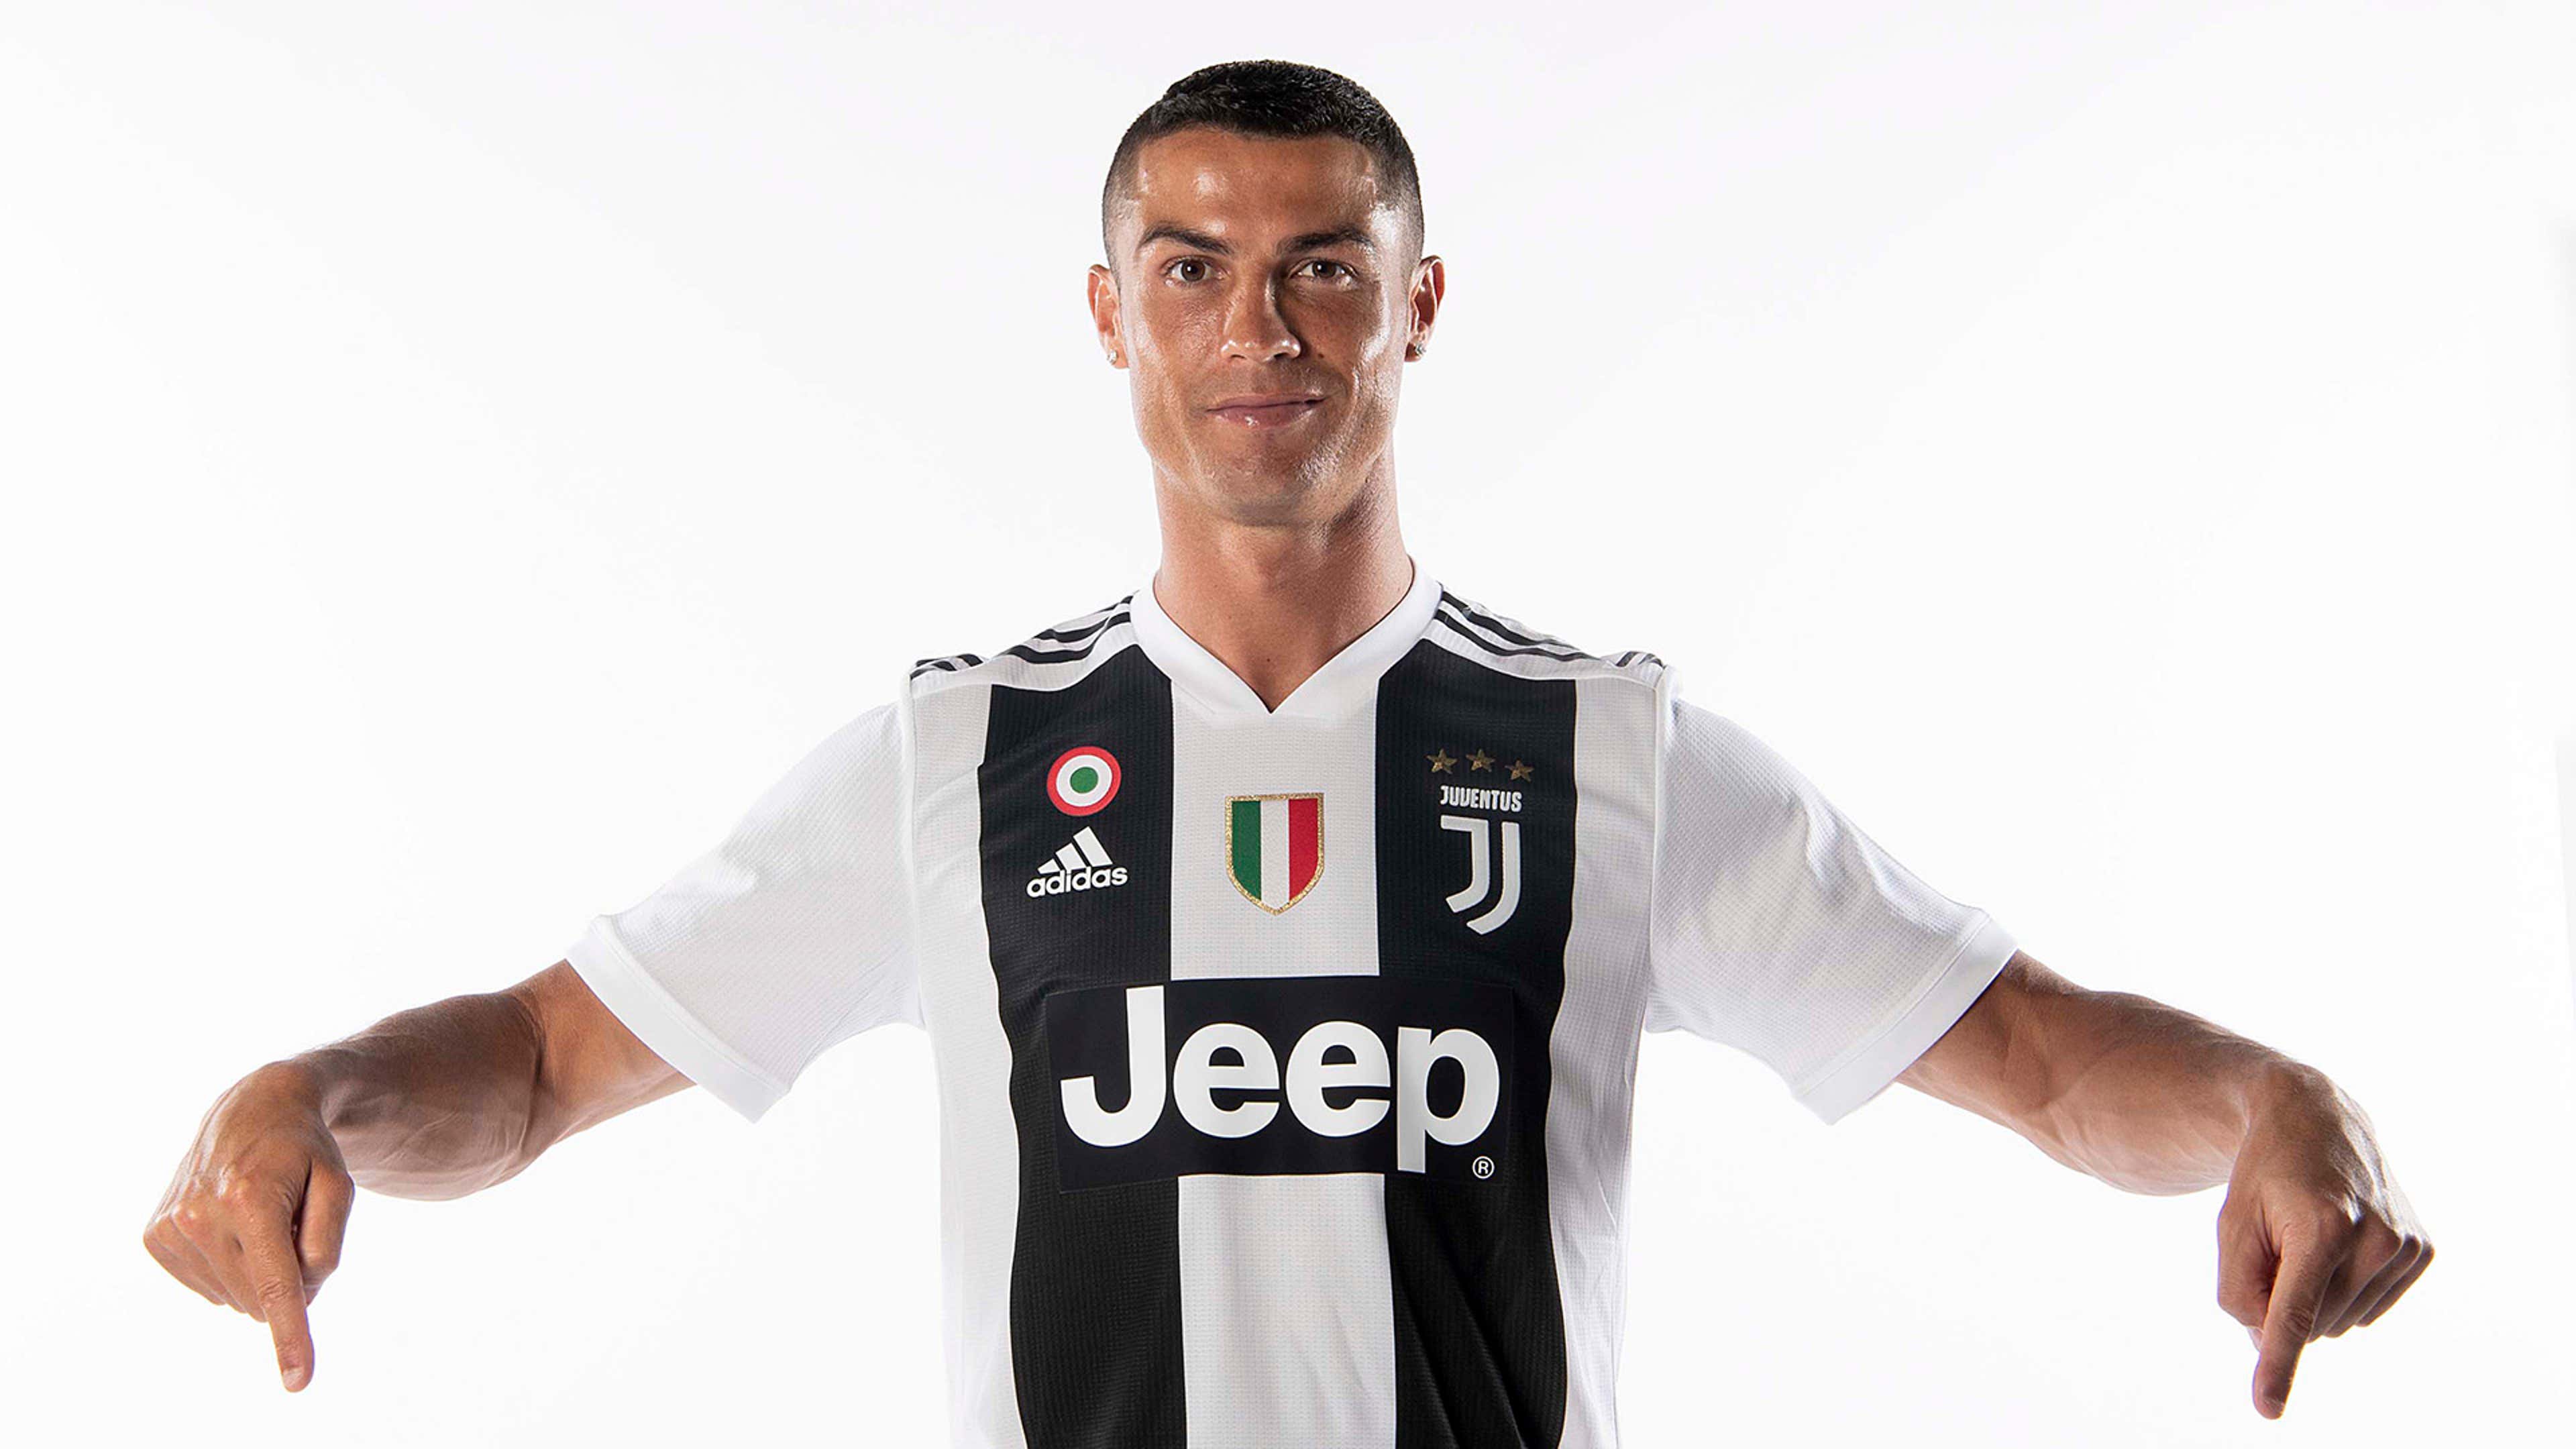 Juventus, Le maillot de Cristiano Ronaldo déjà en rupture de stock